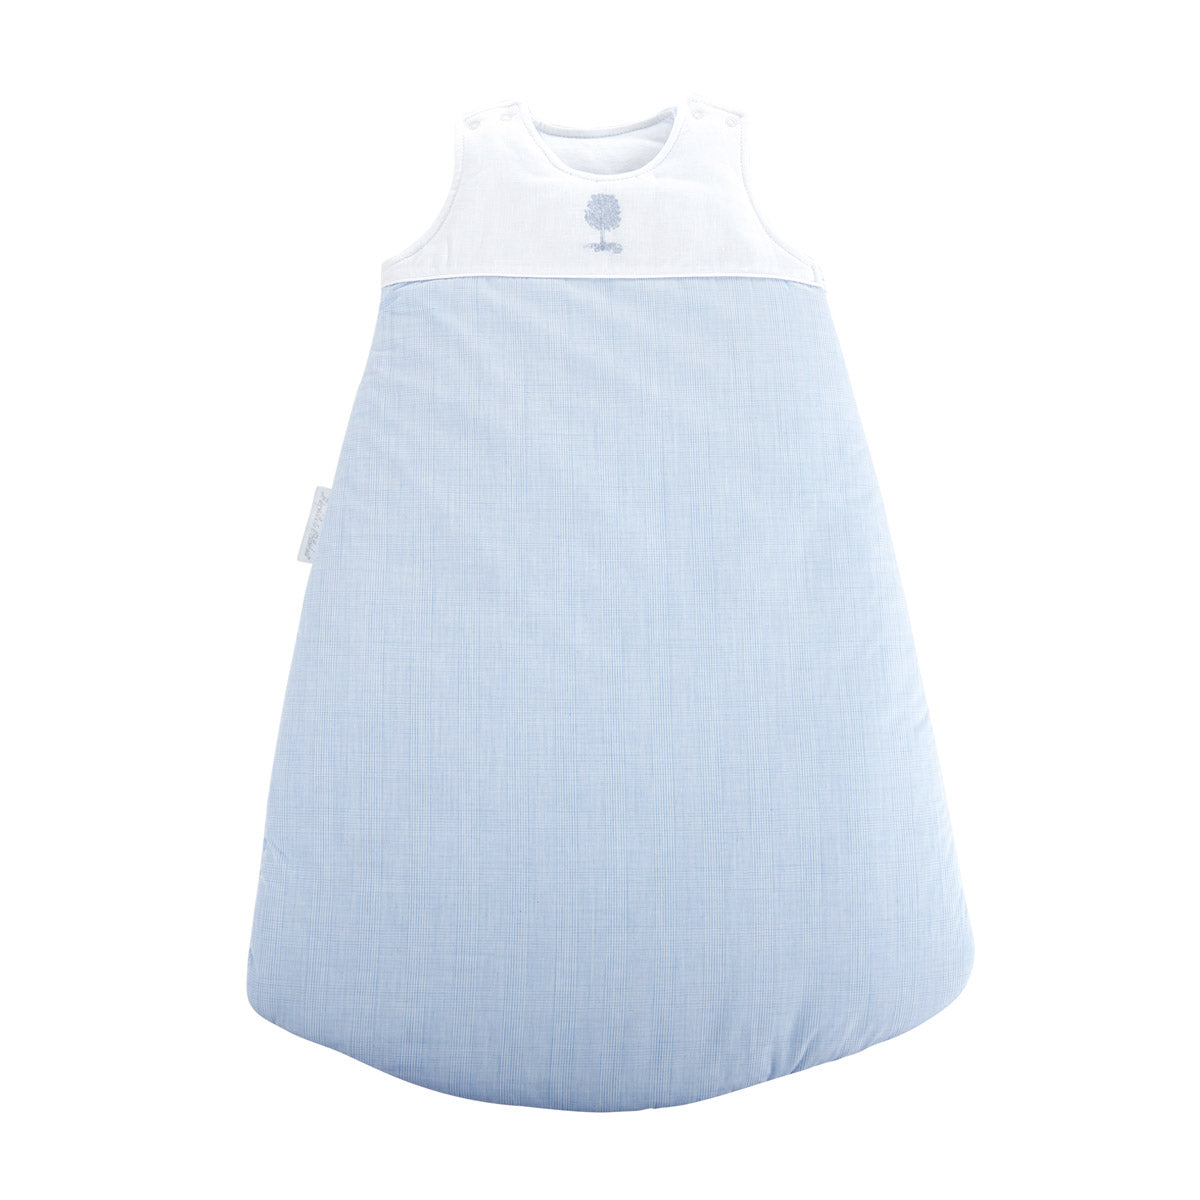 Theophile & Patachou Baby Sleeping Bag 70 cm - Sweet Blue / White